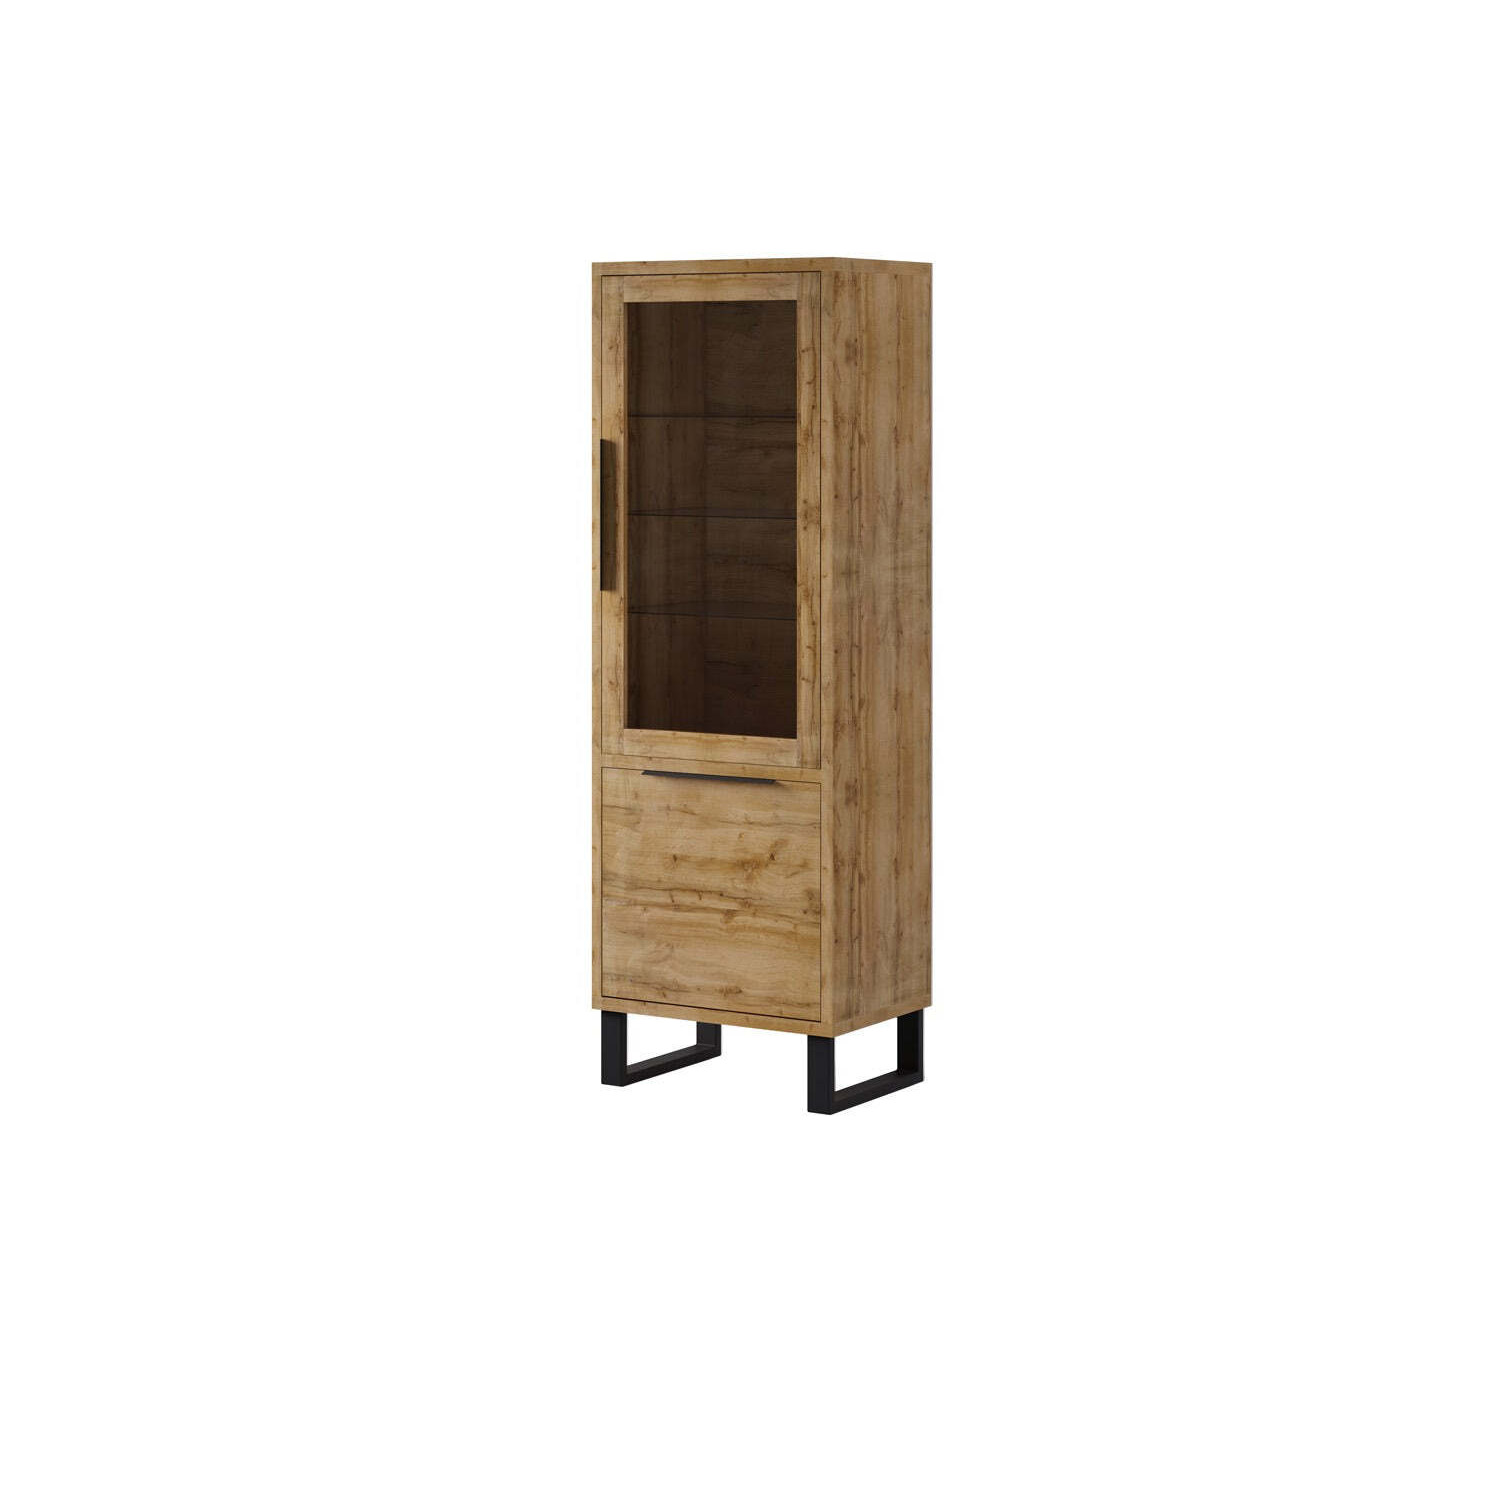 Halle 05 Tall Display Cabinet 84cm - Oak Wotan 64cm - image 1